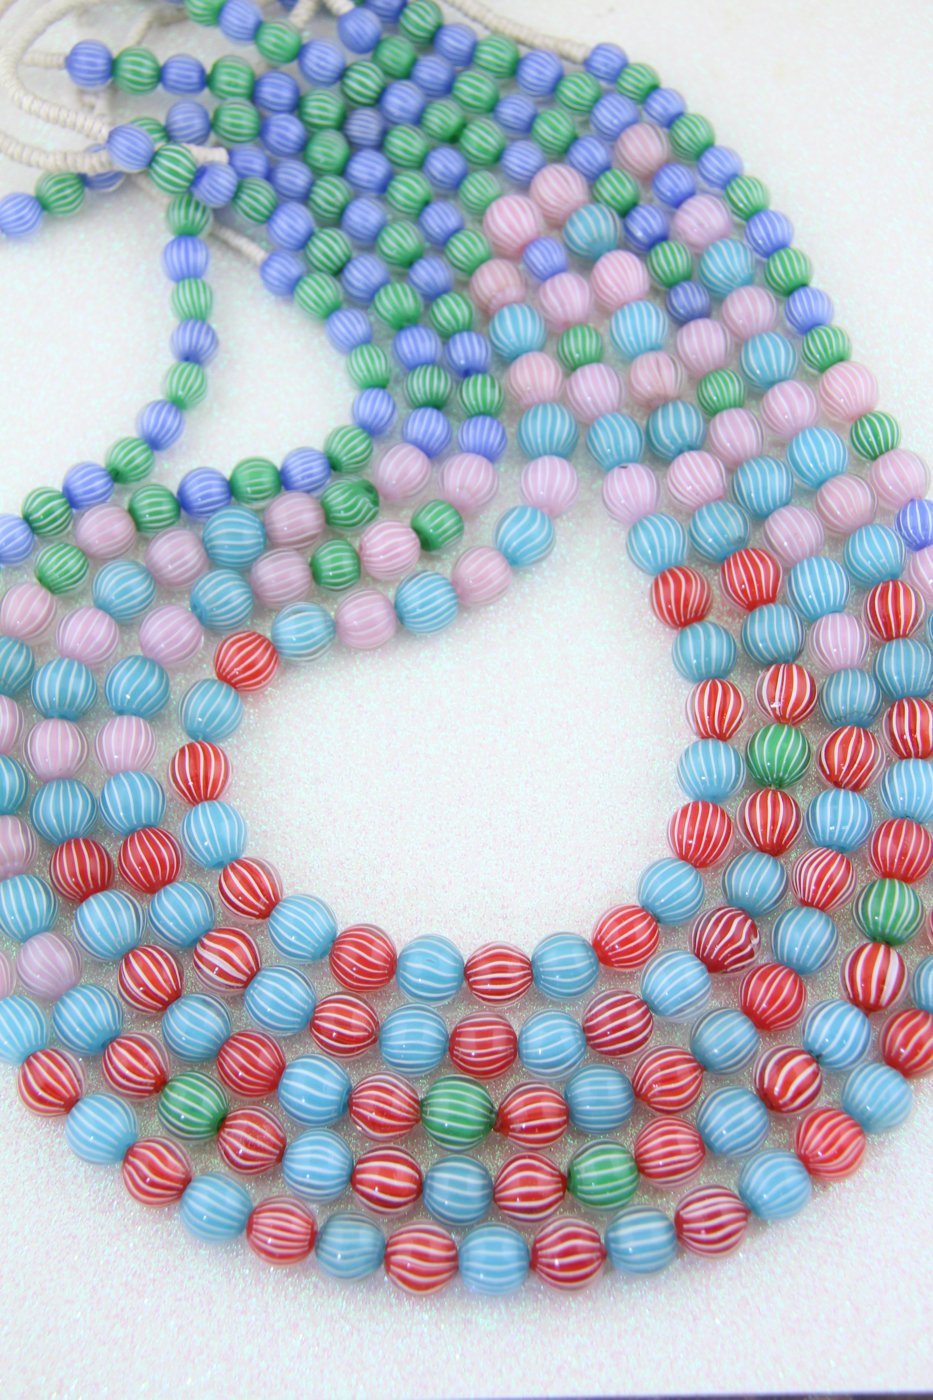 Gooseberry Antique Pastel African Venetian Trade Beads, 9-14mm